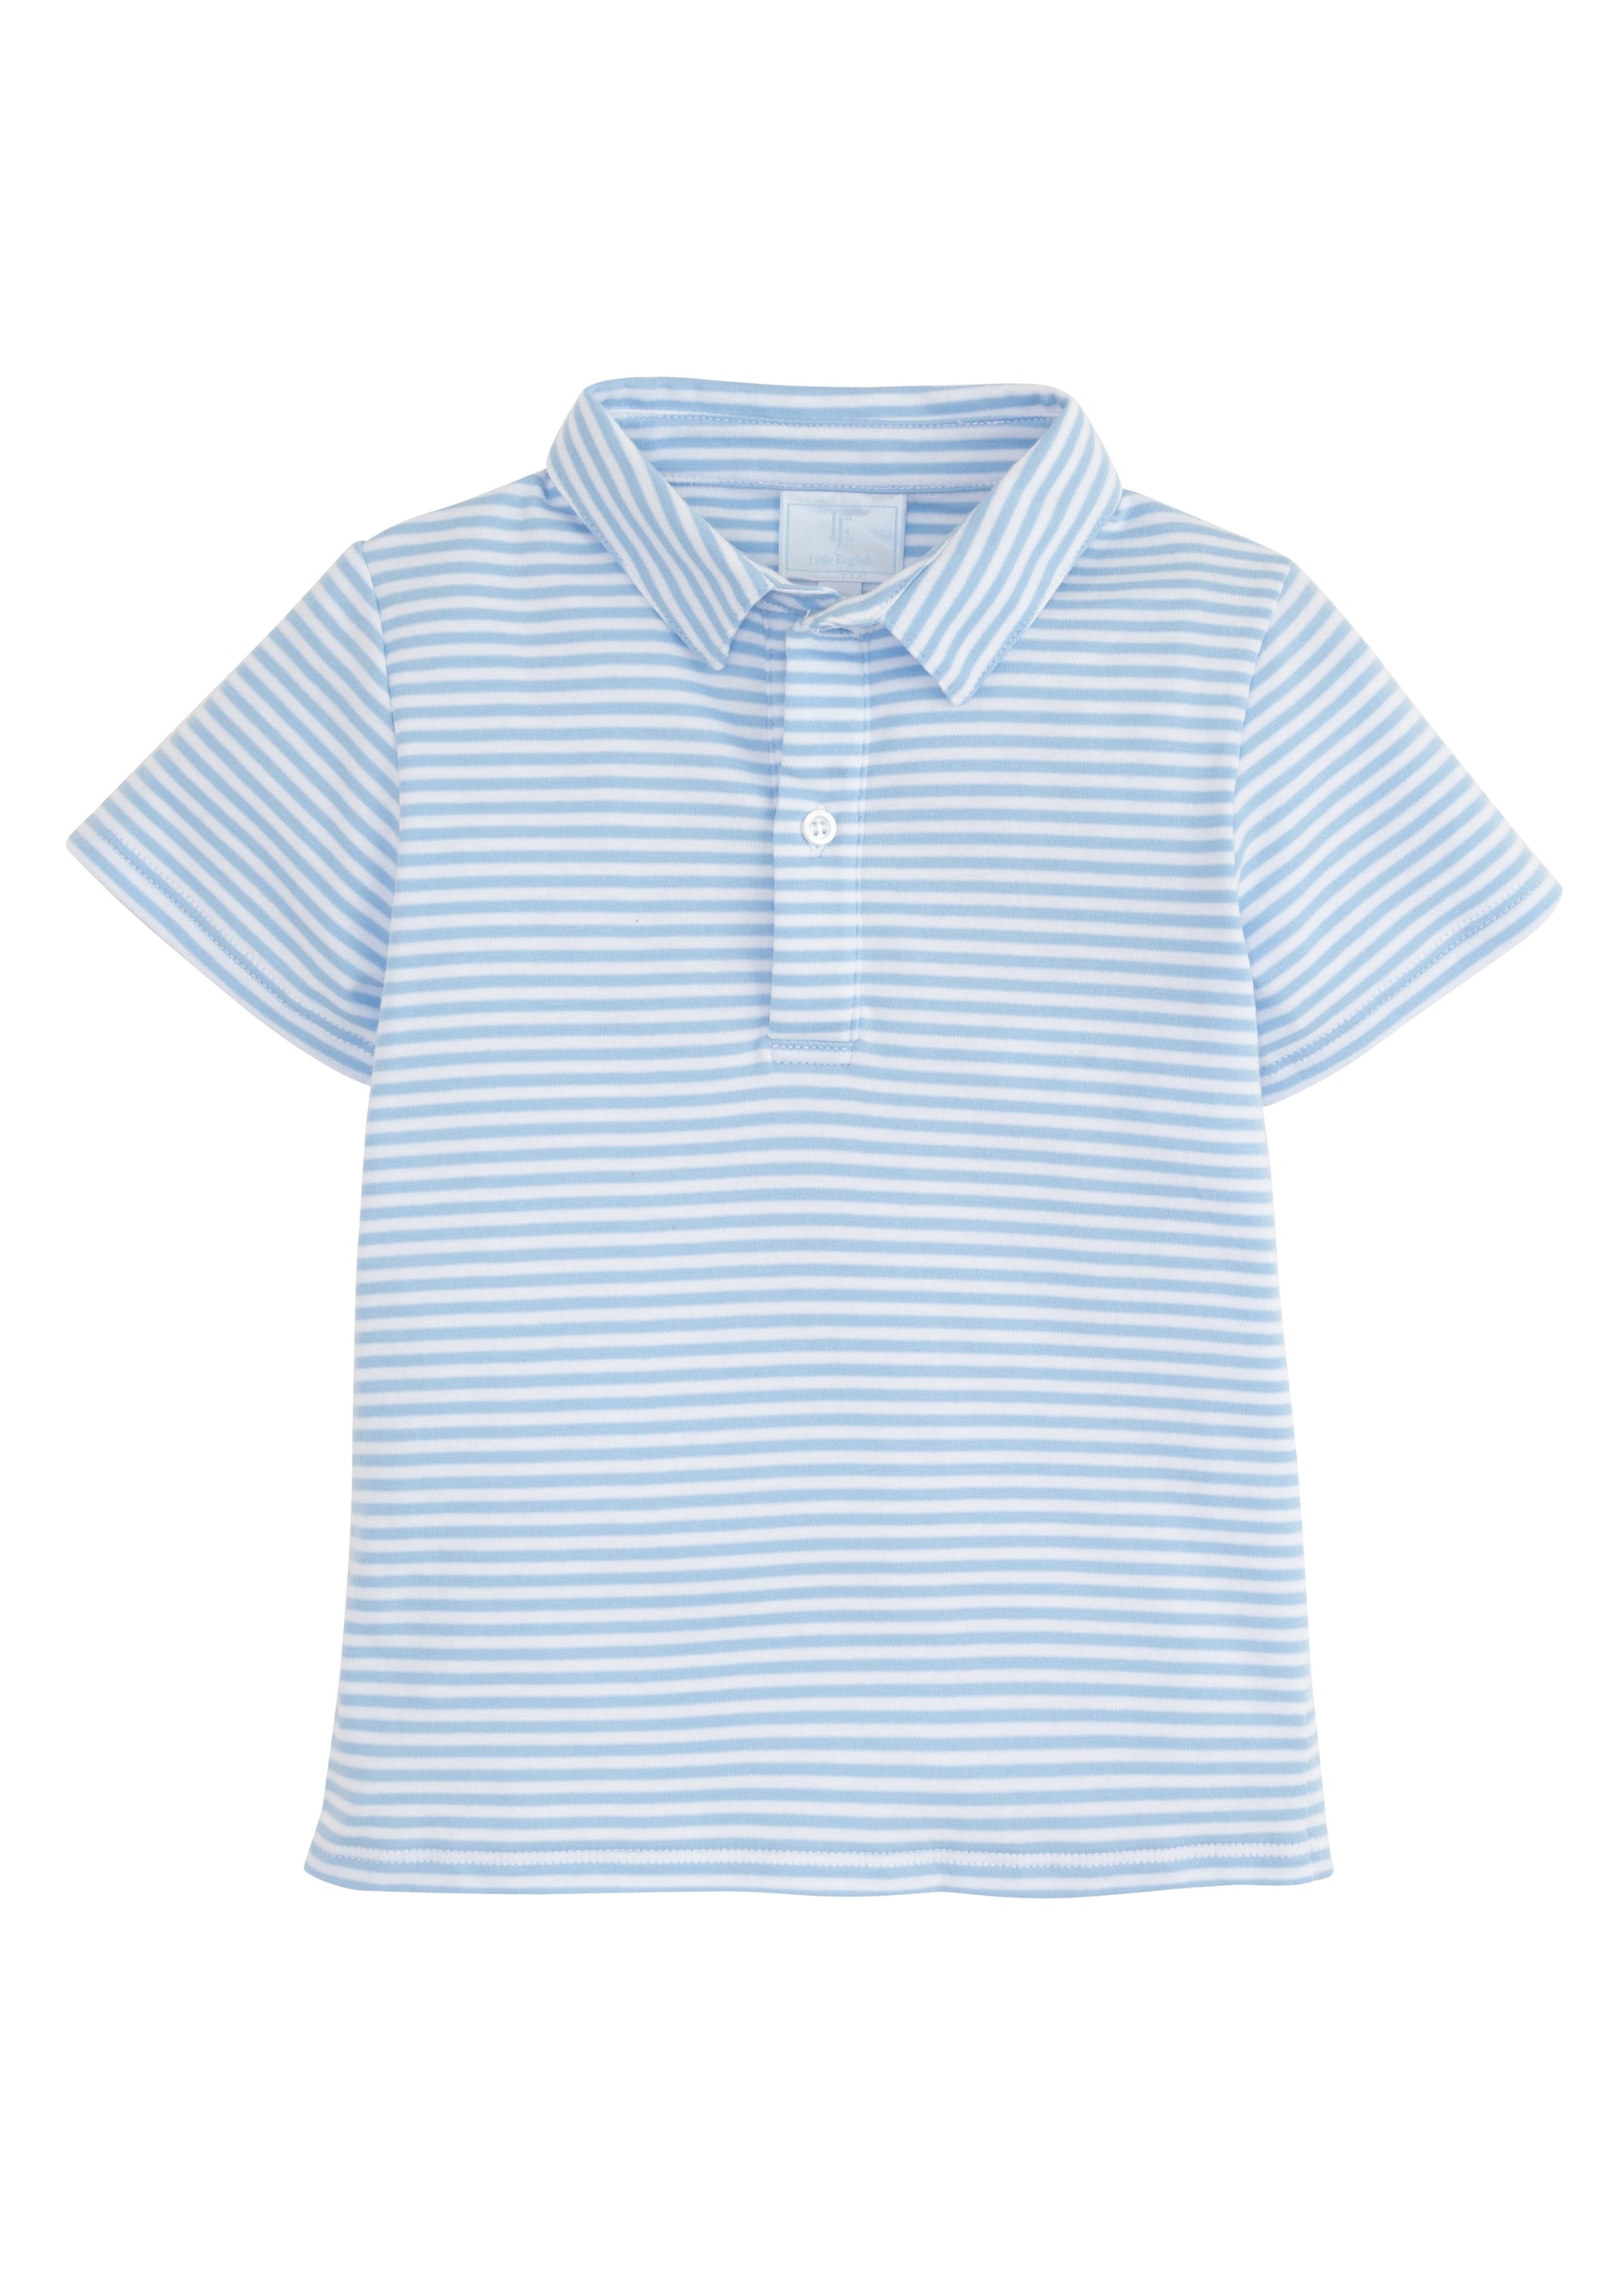 Little English Short Sleeve Striped Polo - Light Blue